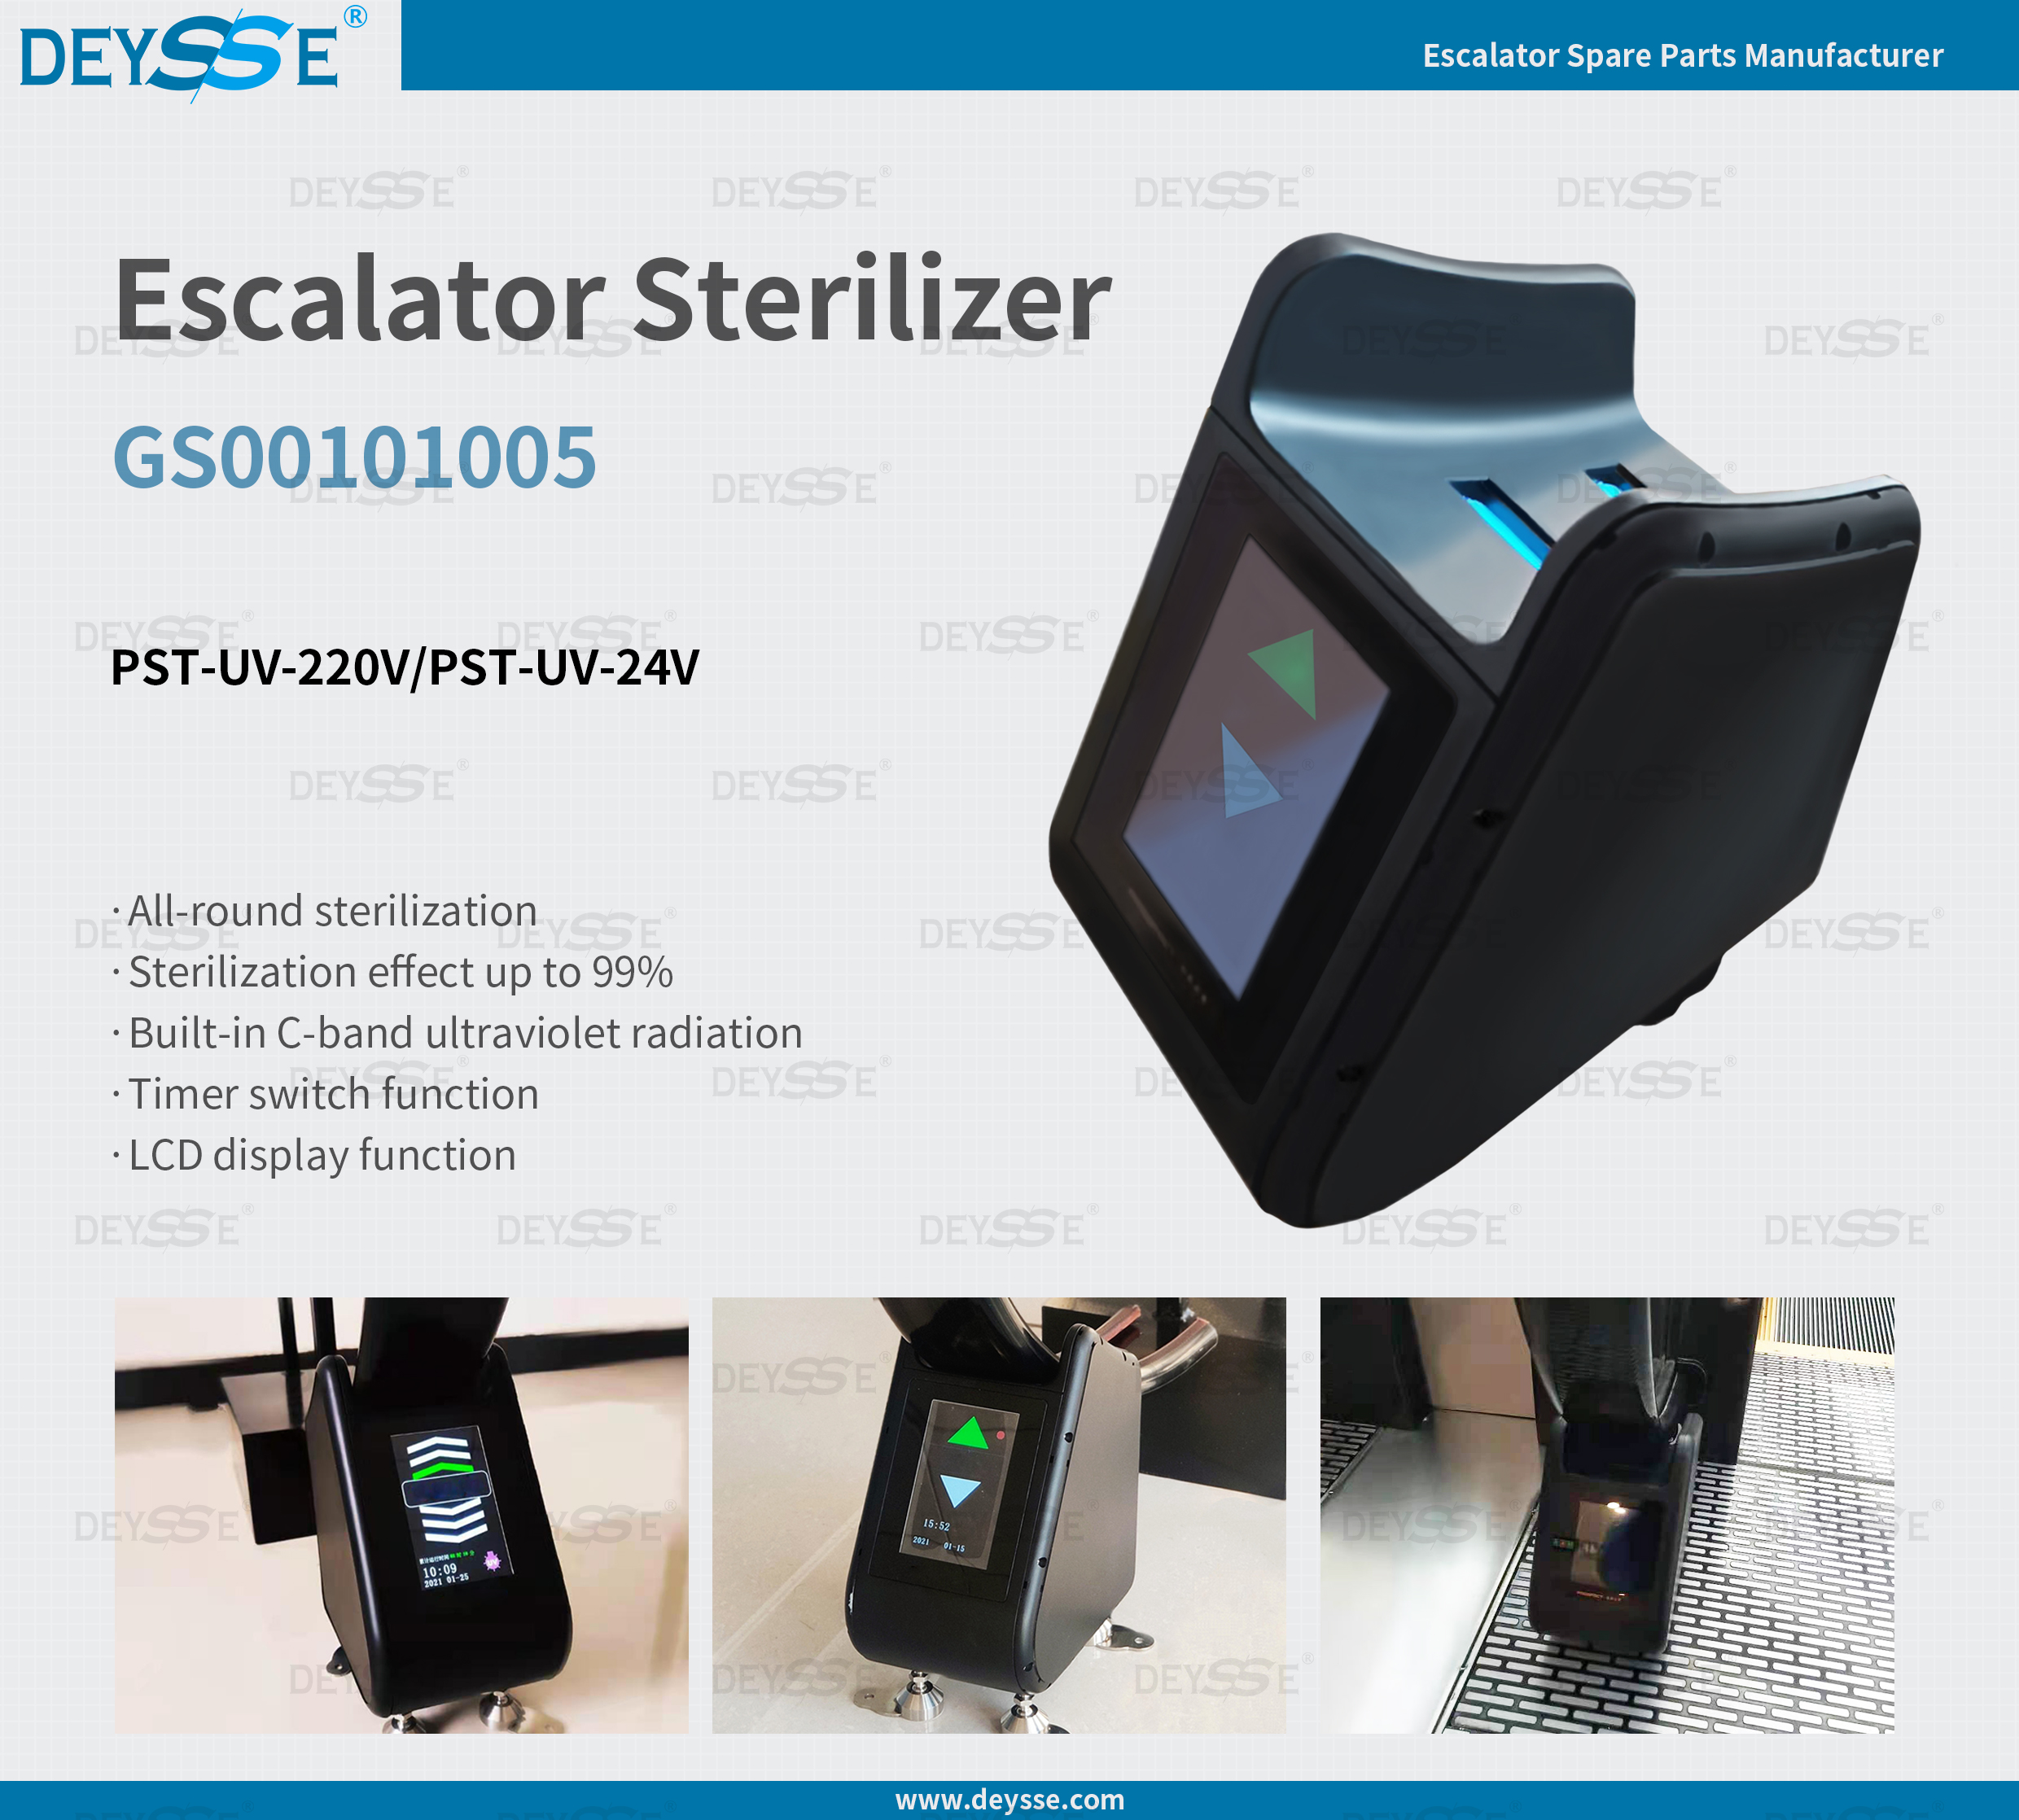 Escalator Sterilizers provide a safe environment for you